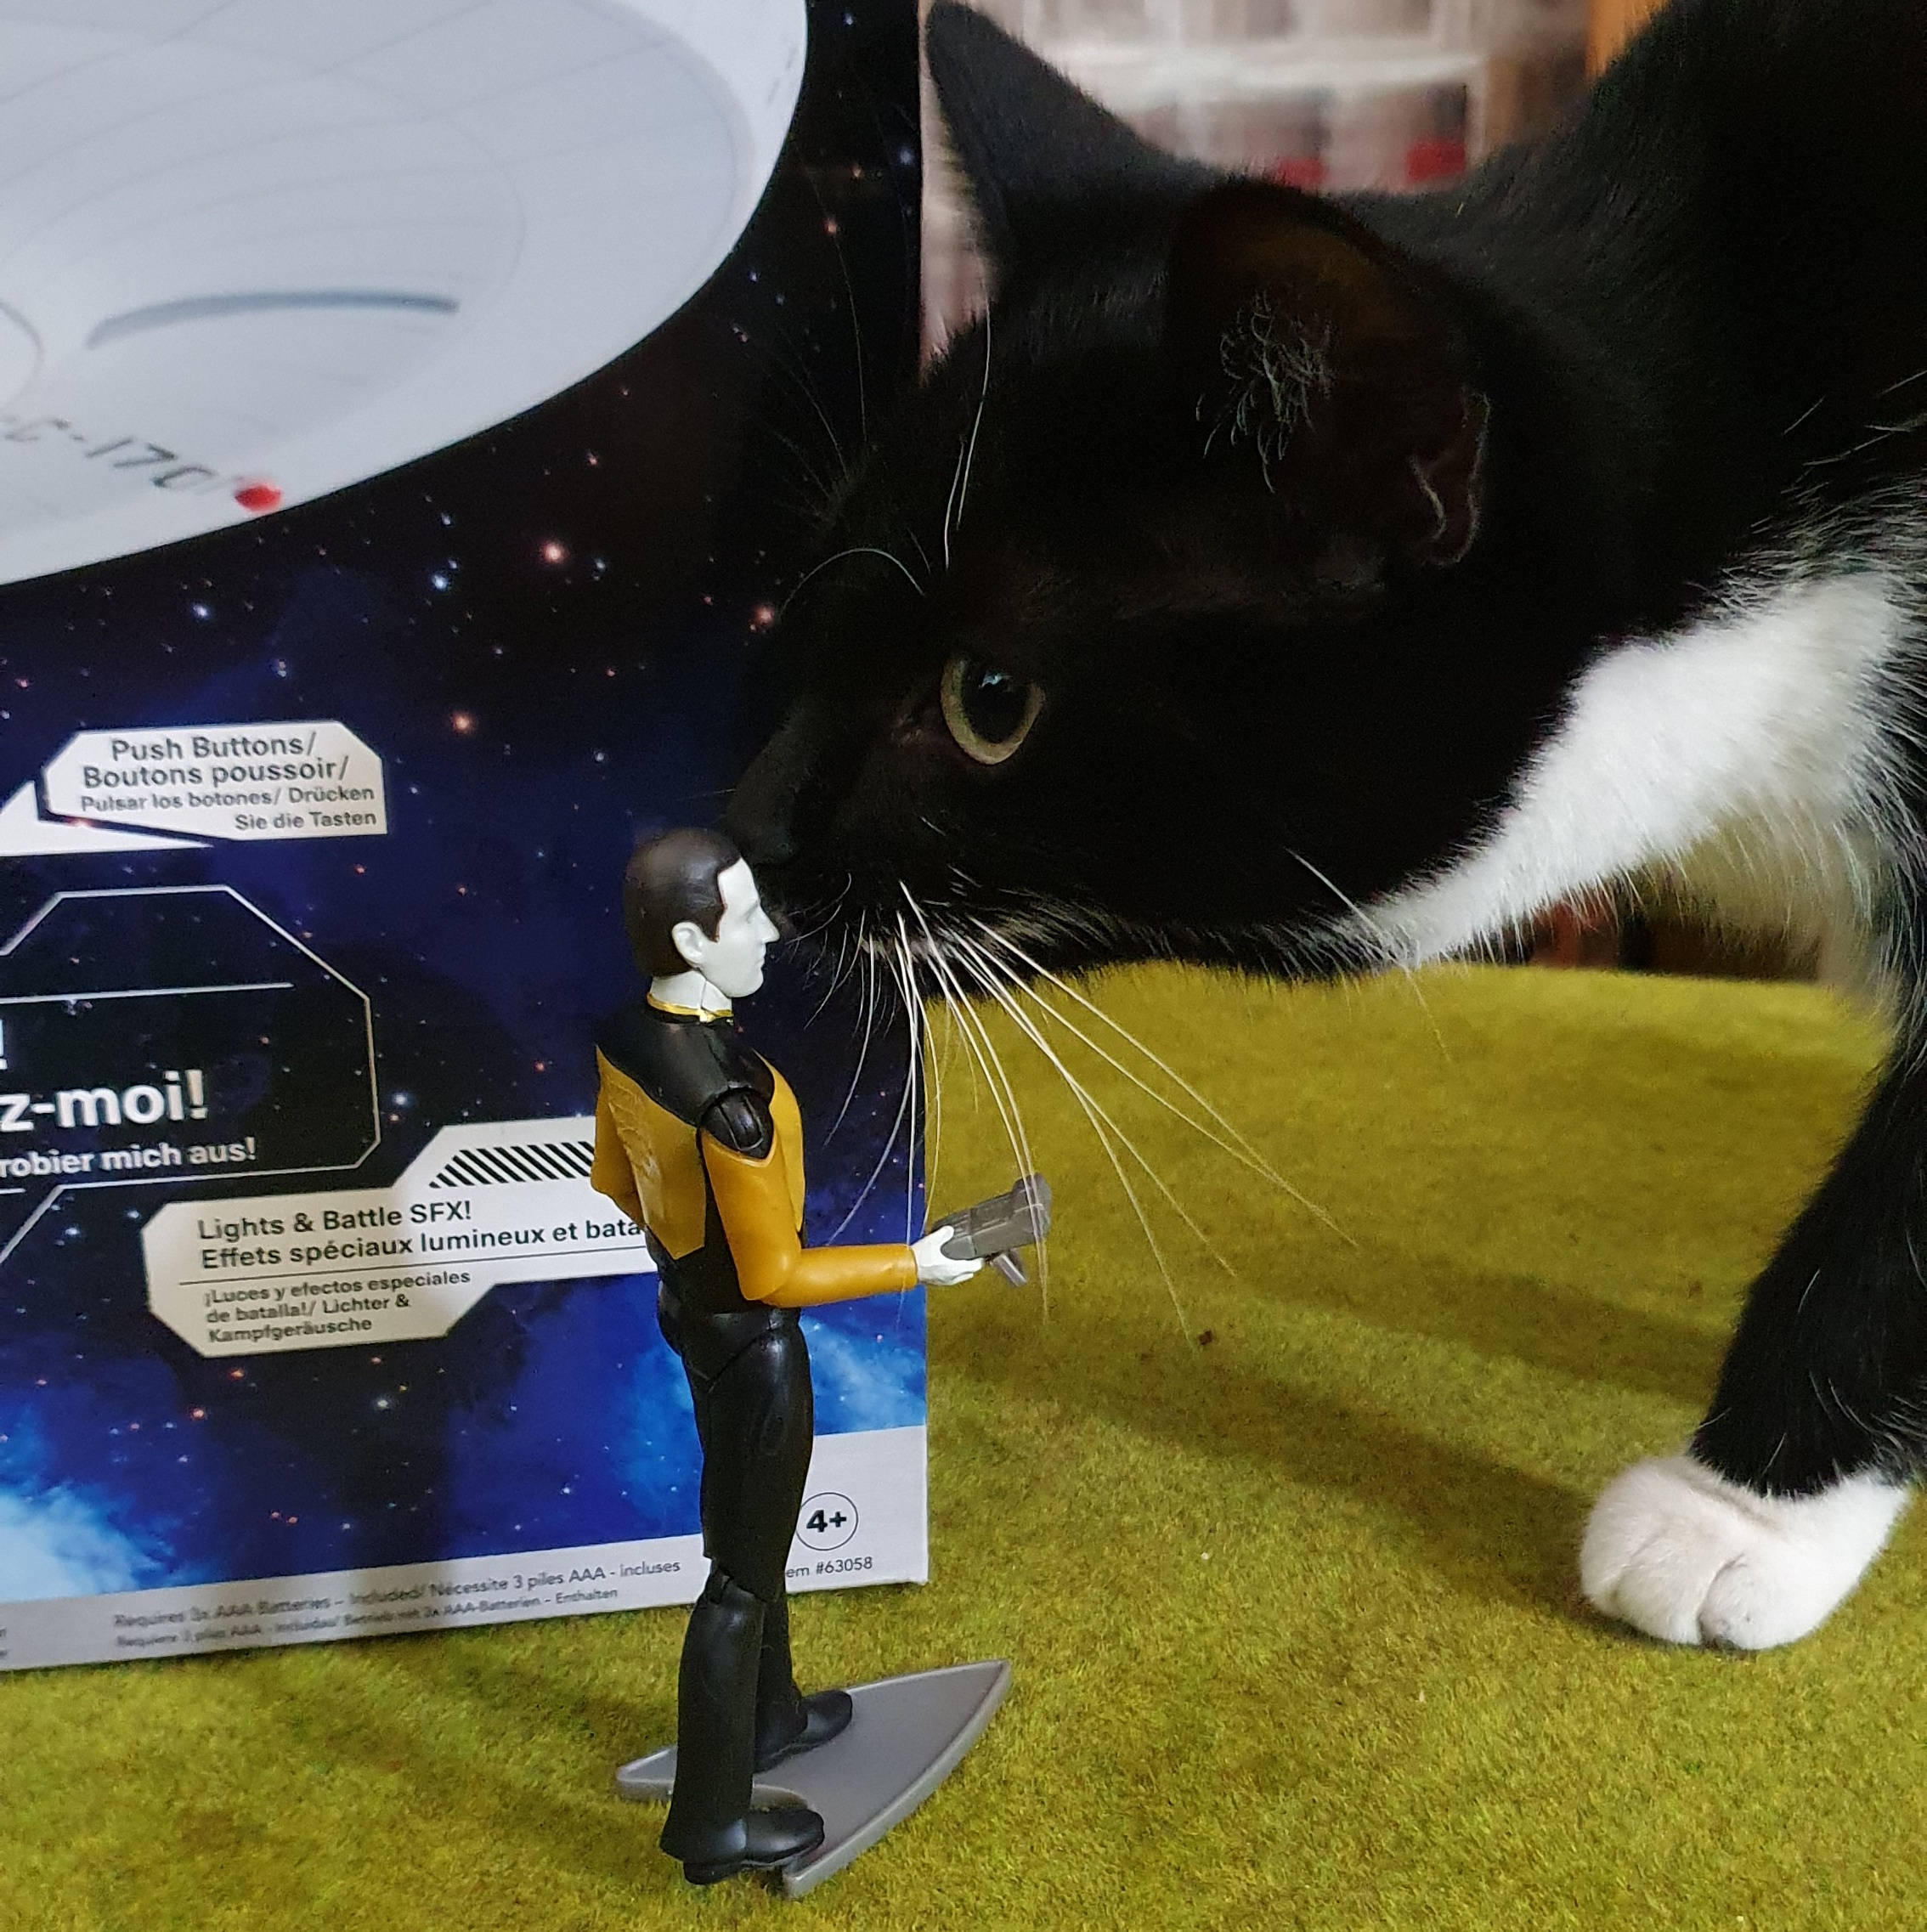 Star Trek: The Original Series Cats Coaster Set of 4